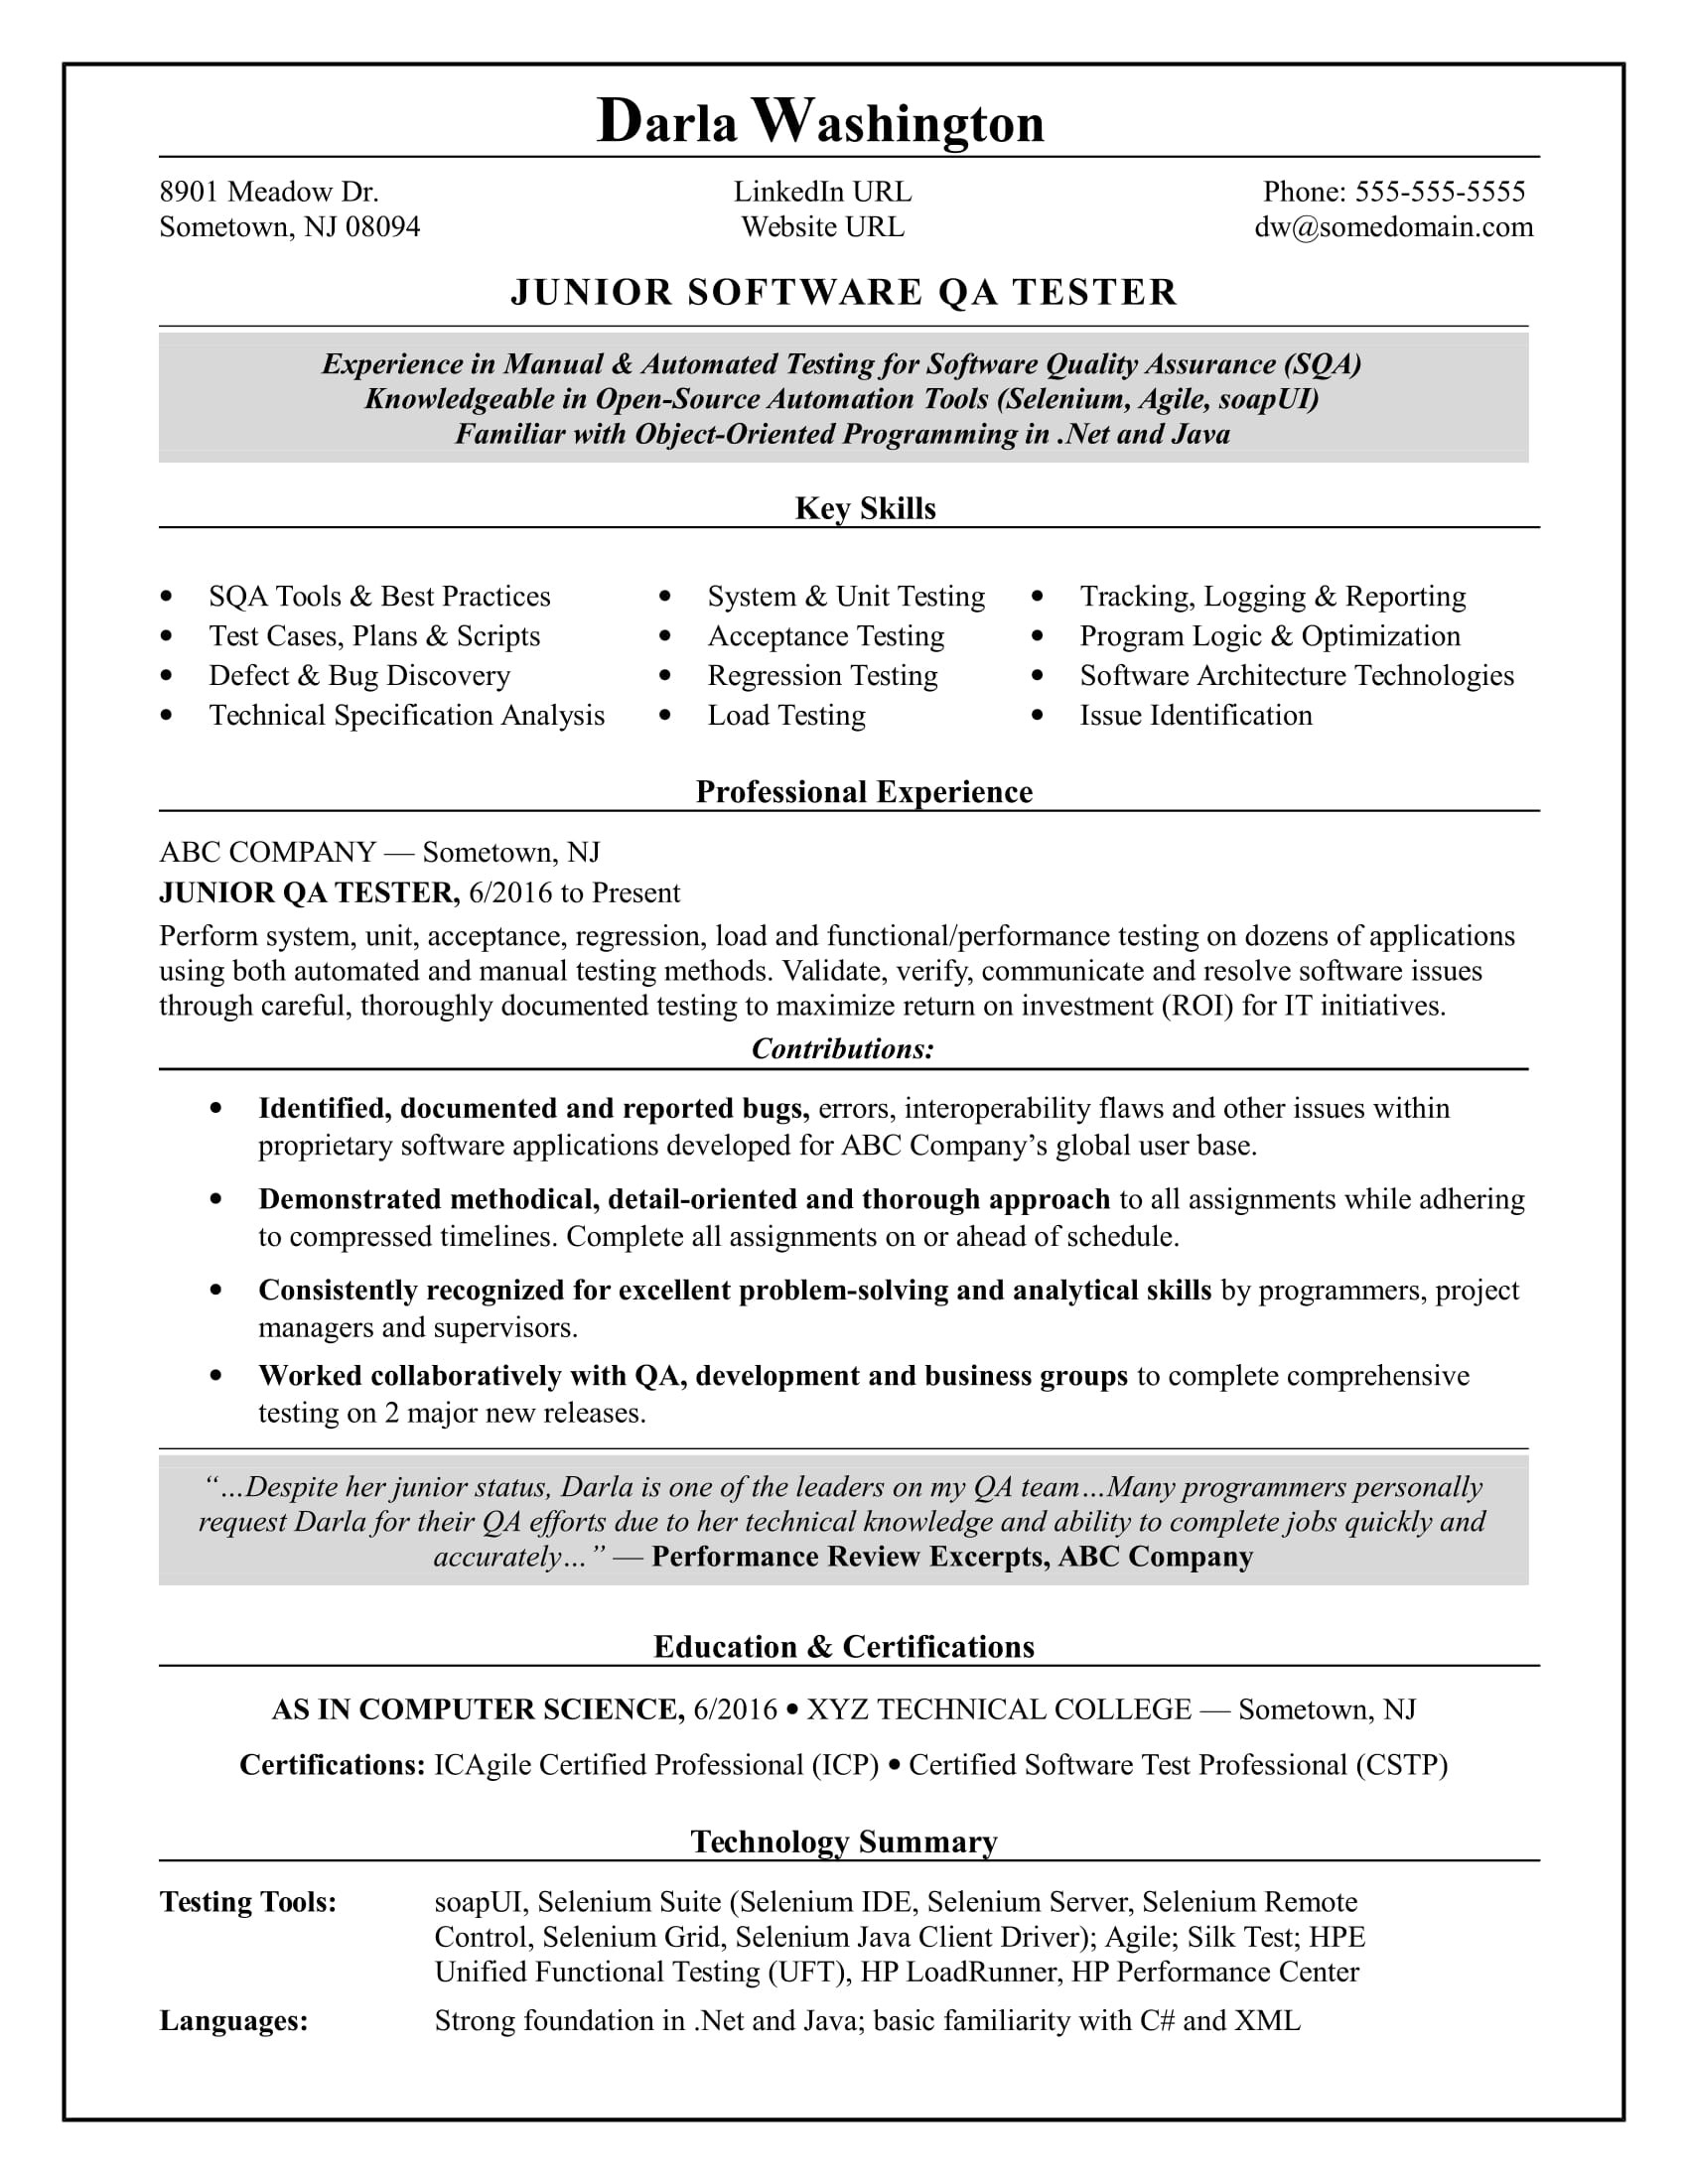 Entry Level Manual Qa Tester Resume Sample Entry-level Qa software Tester Resume Sample Monster.com